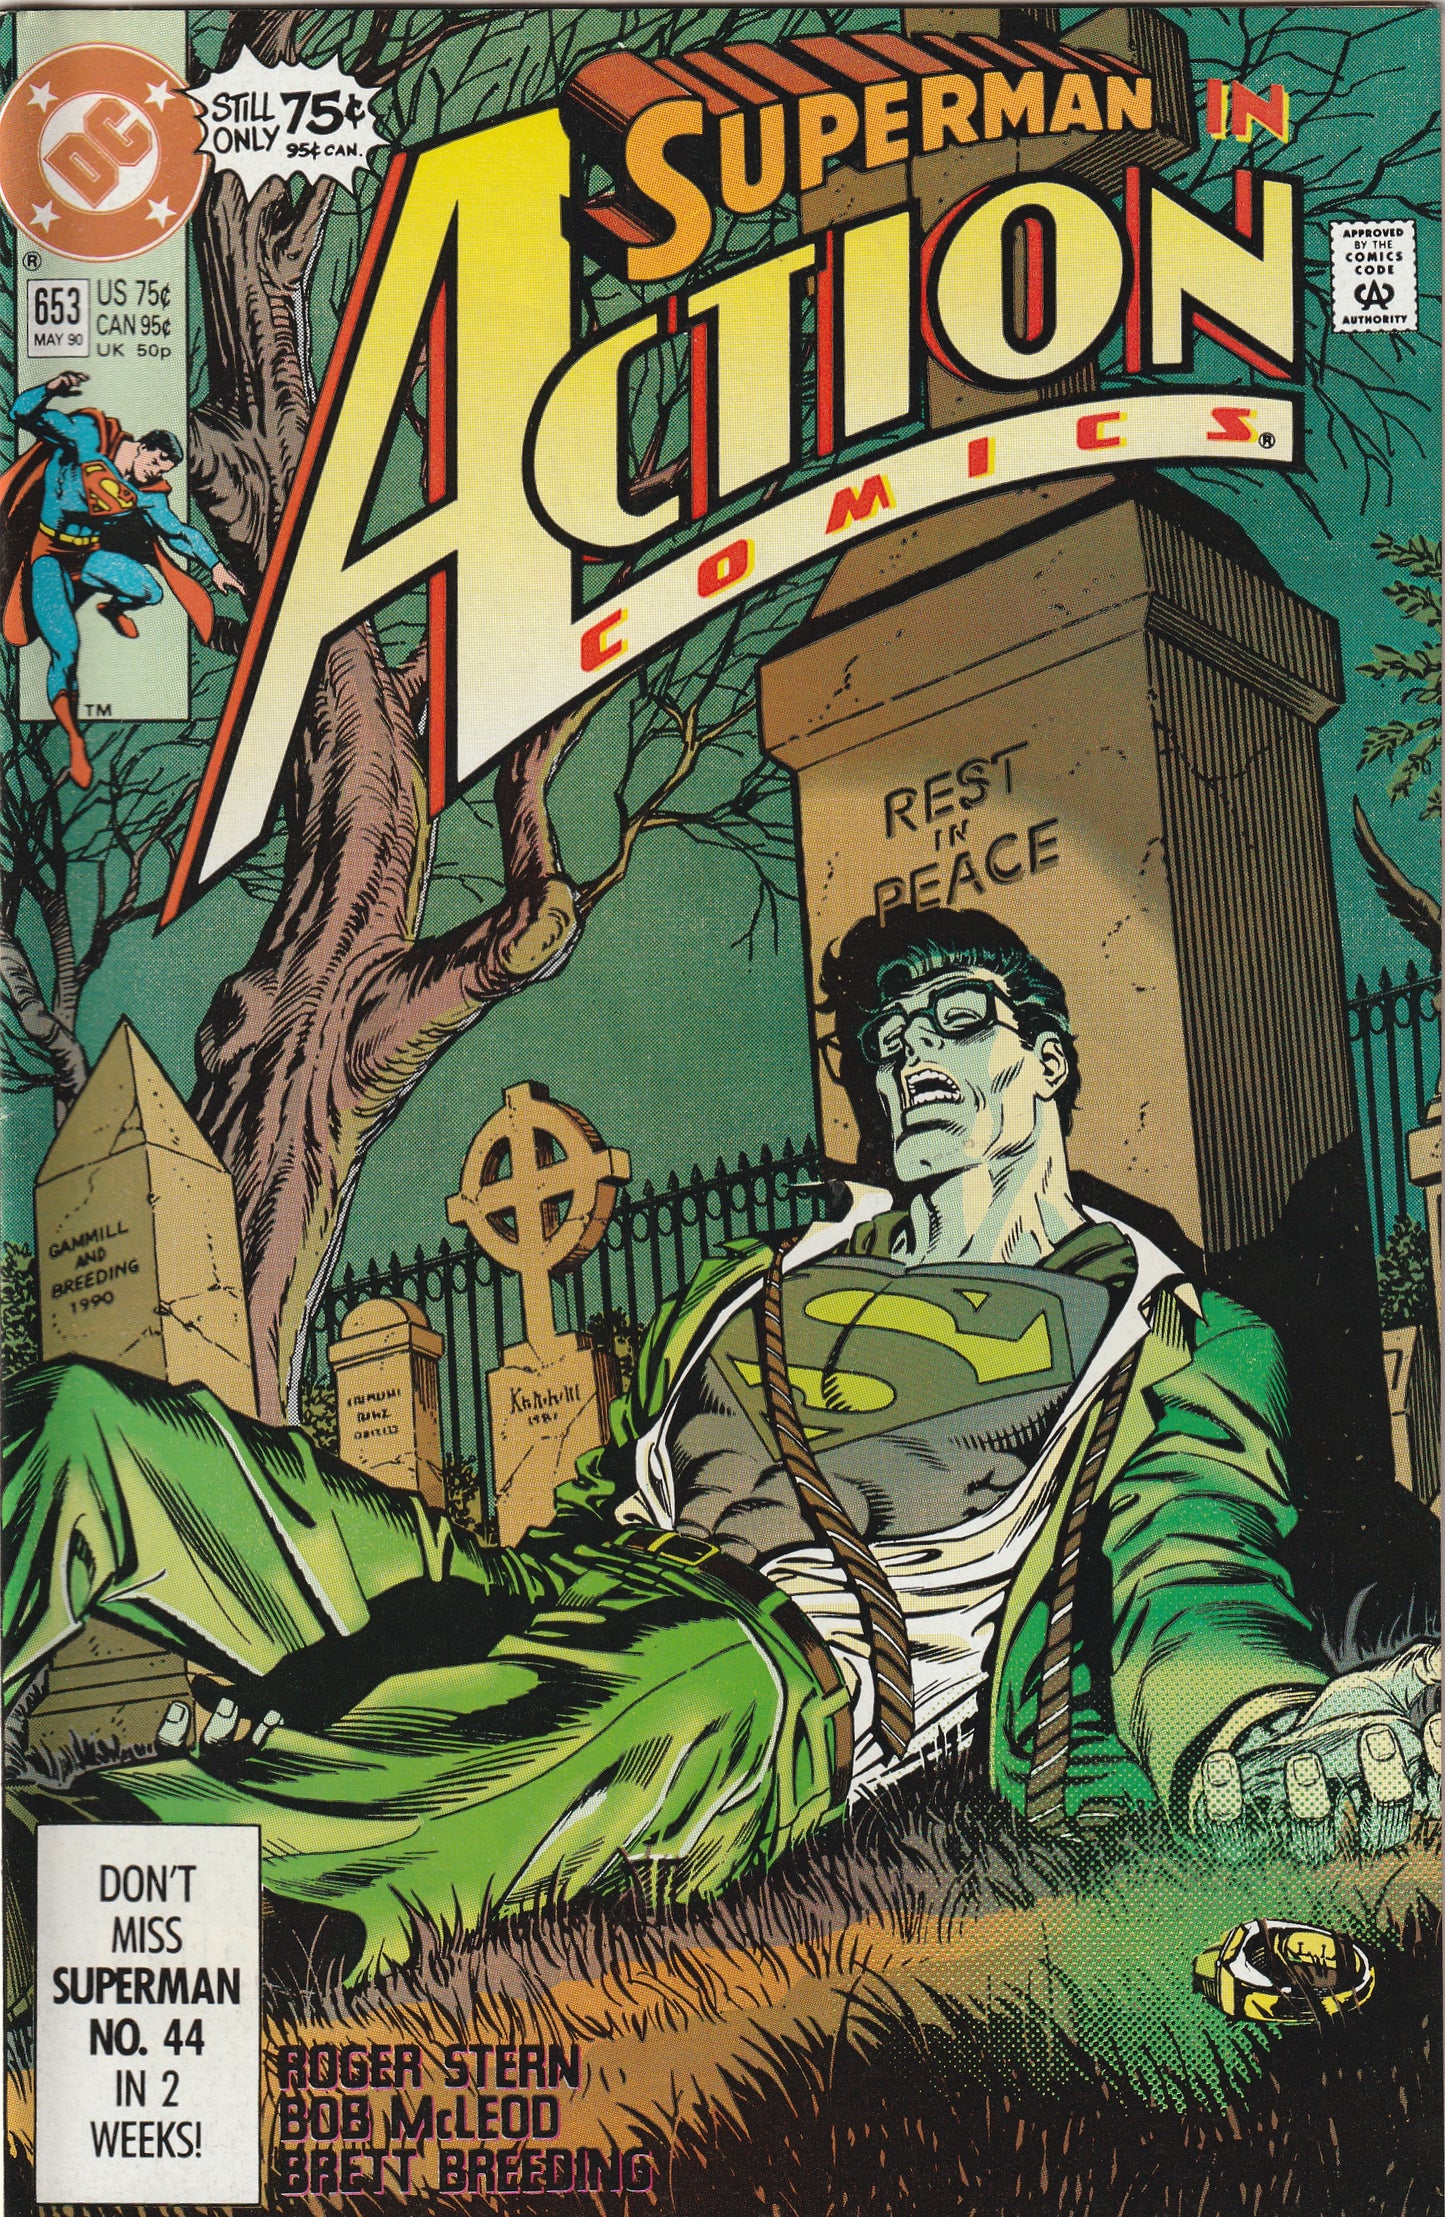 Action Comics #653 (1990)